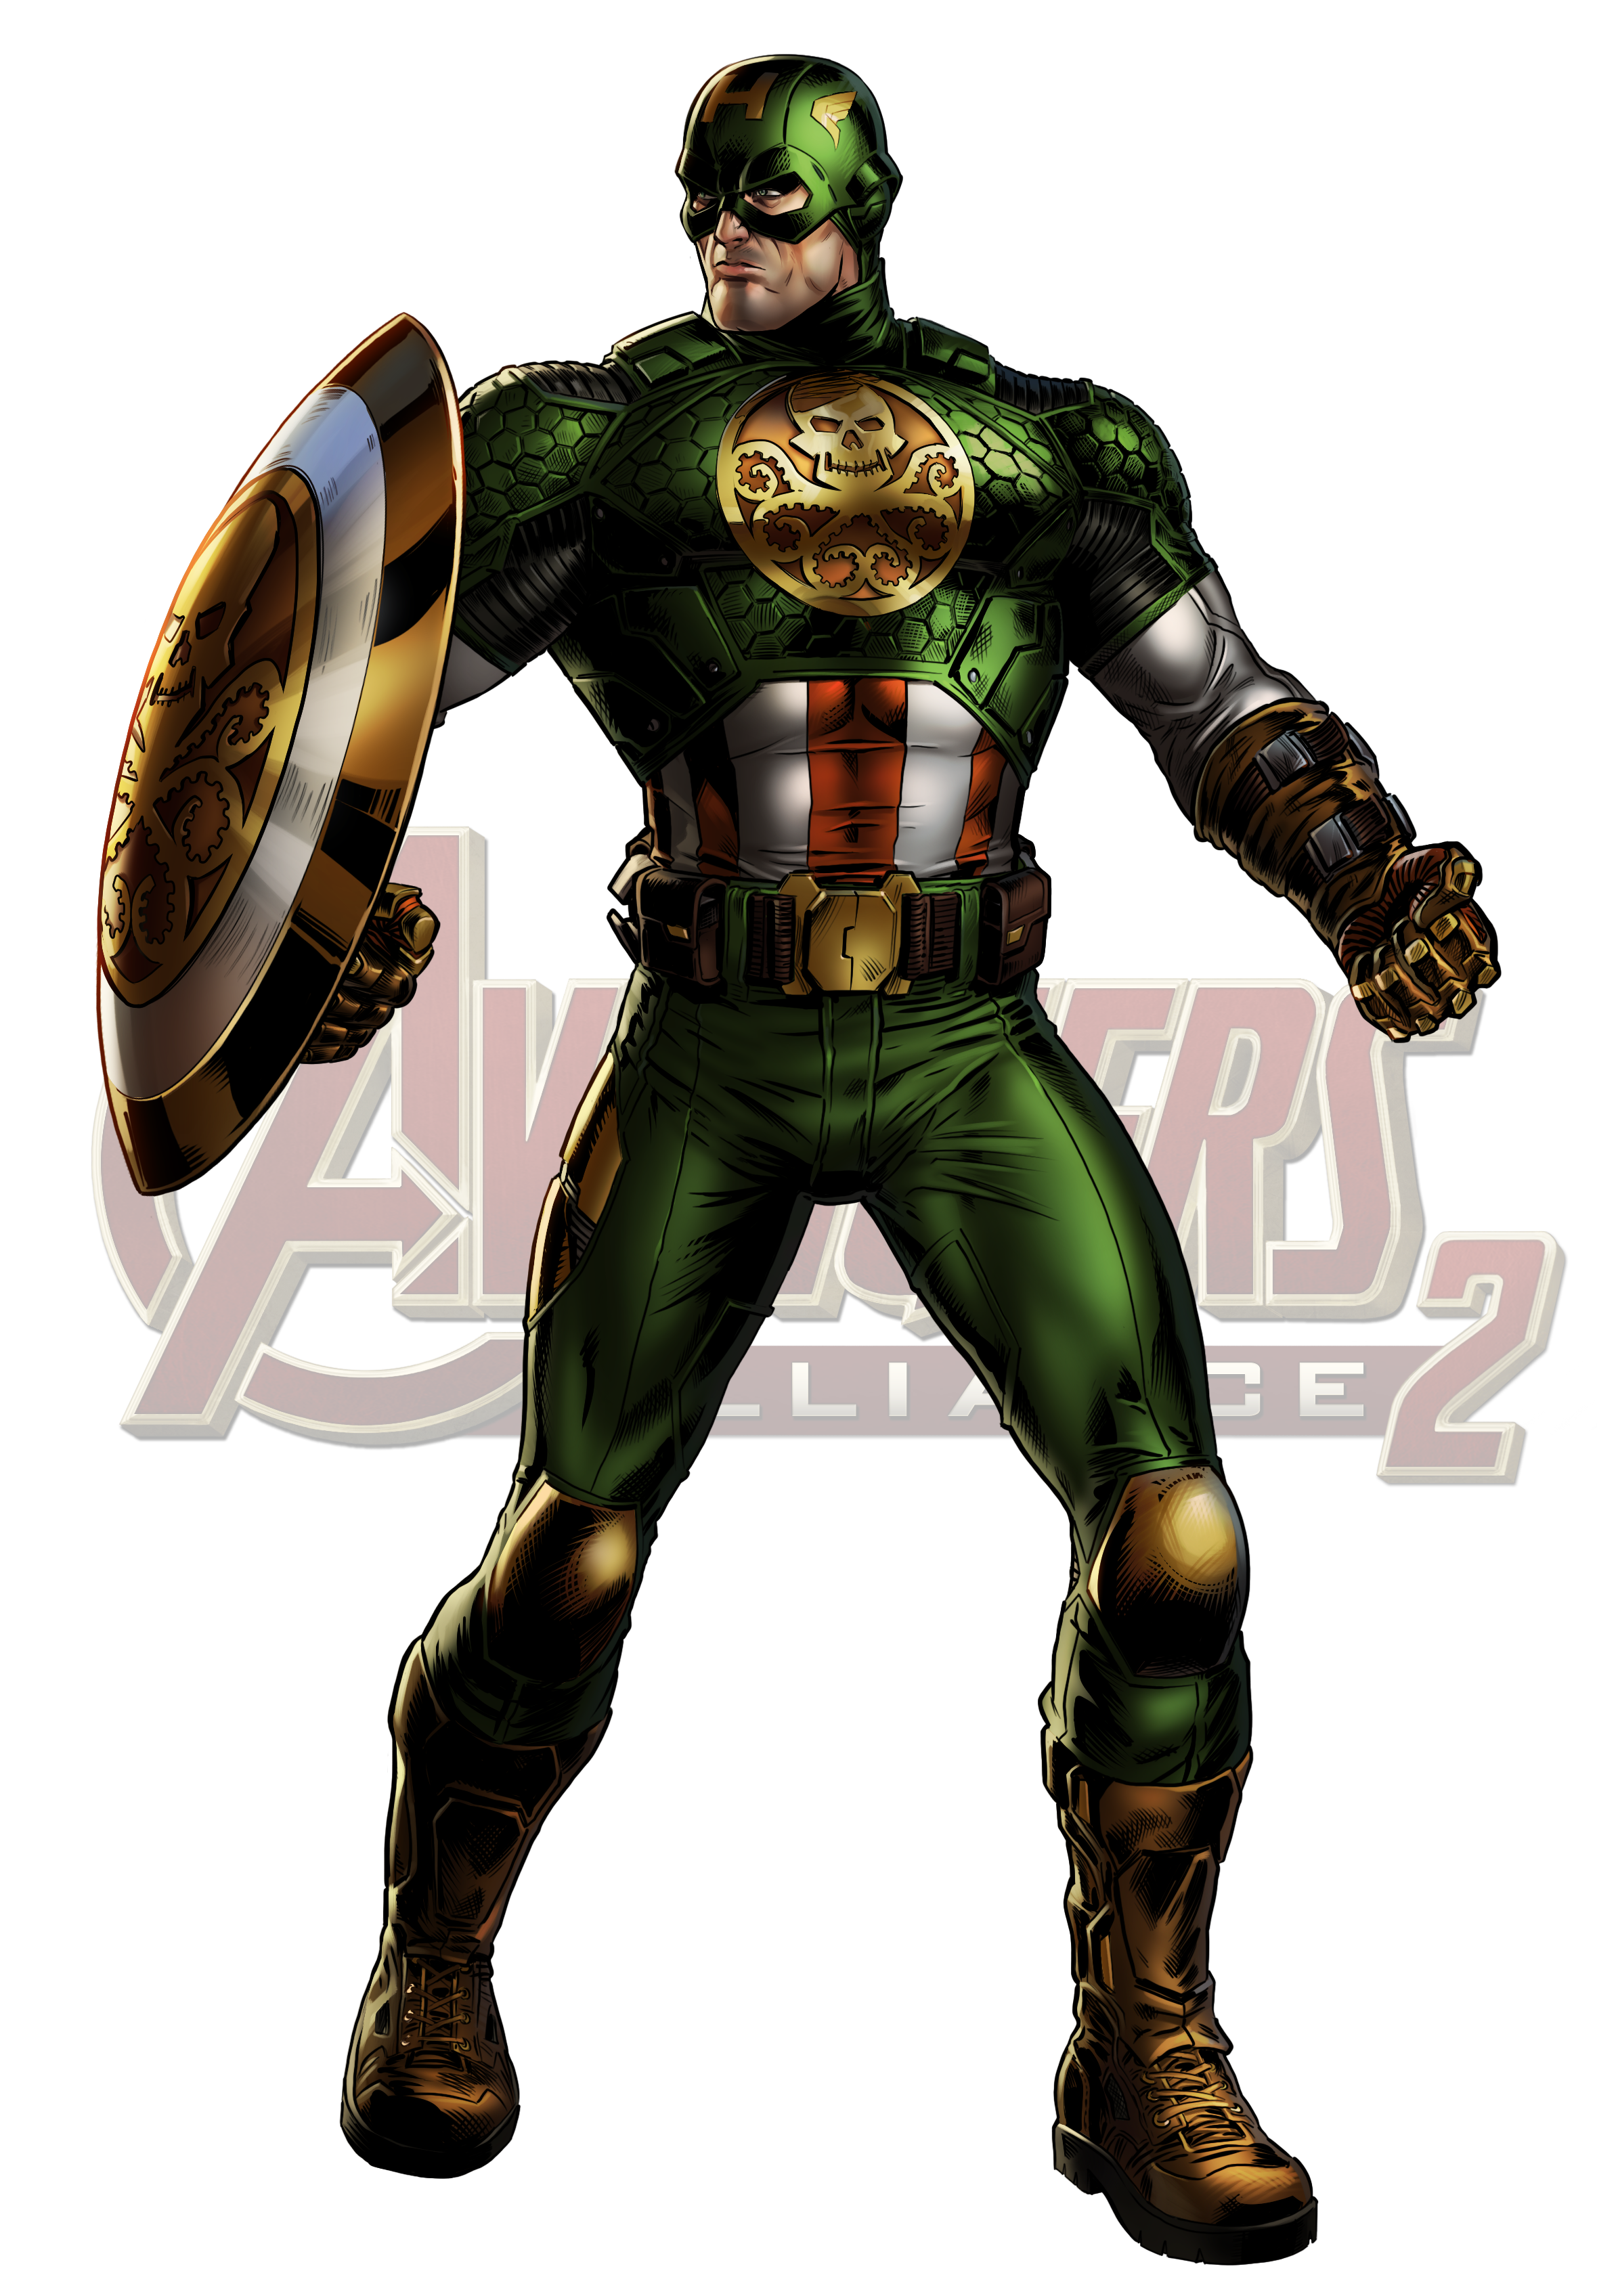 Marvel: Avengers Alliance Backgrounds, Compatible - PC, Mobile, Gadgets| 2359x3392 px